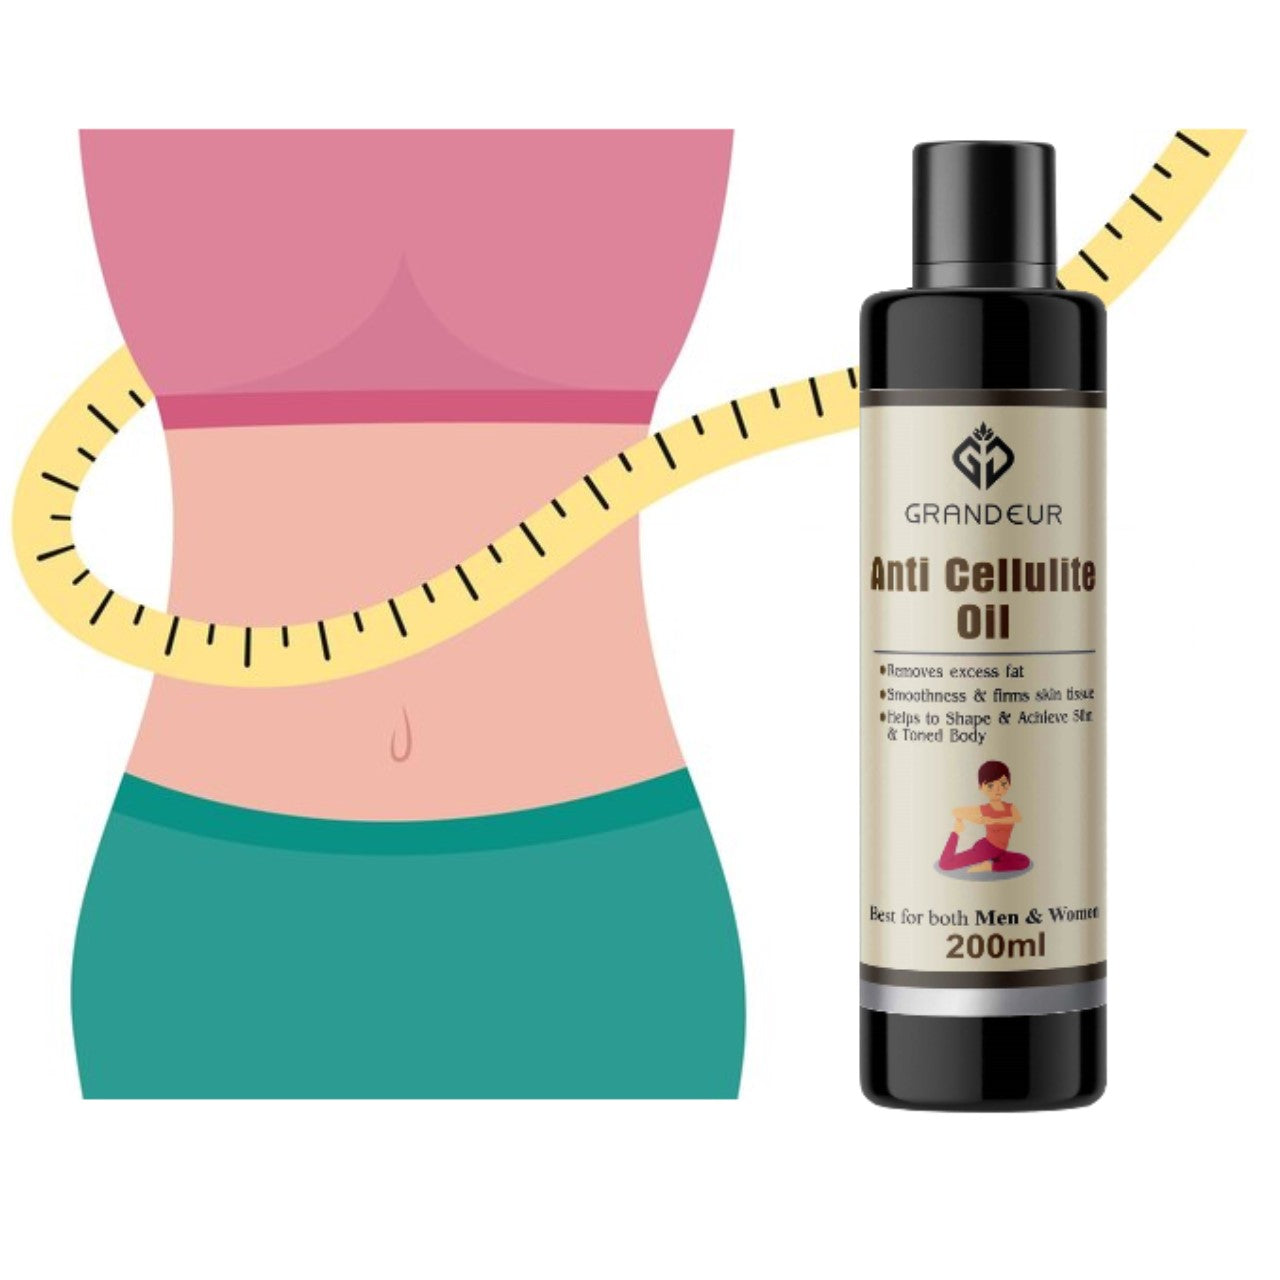 Grandeur Anti Cellulite & Skin Toning Fat Burning Oil & Slimming For Stomach, Hips, Thighs, Body- 200ml